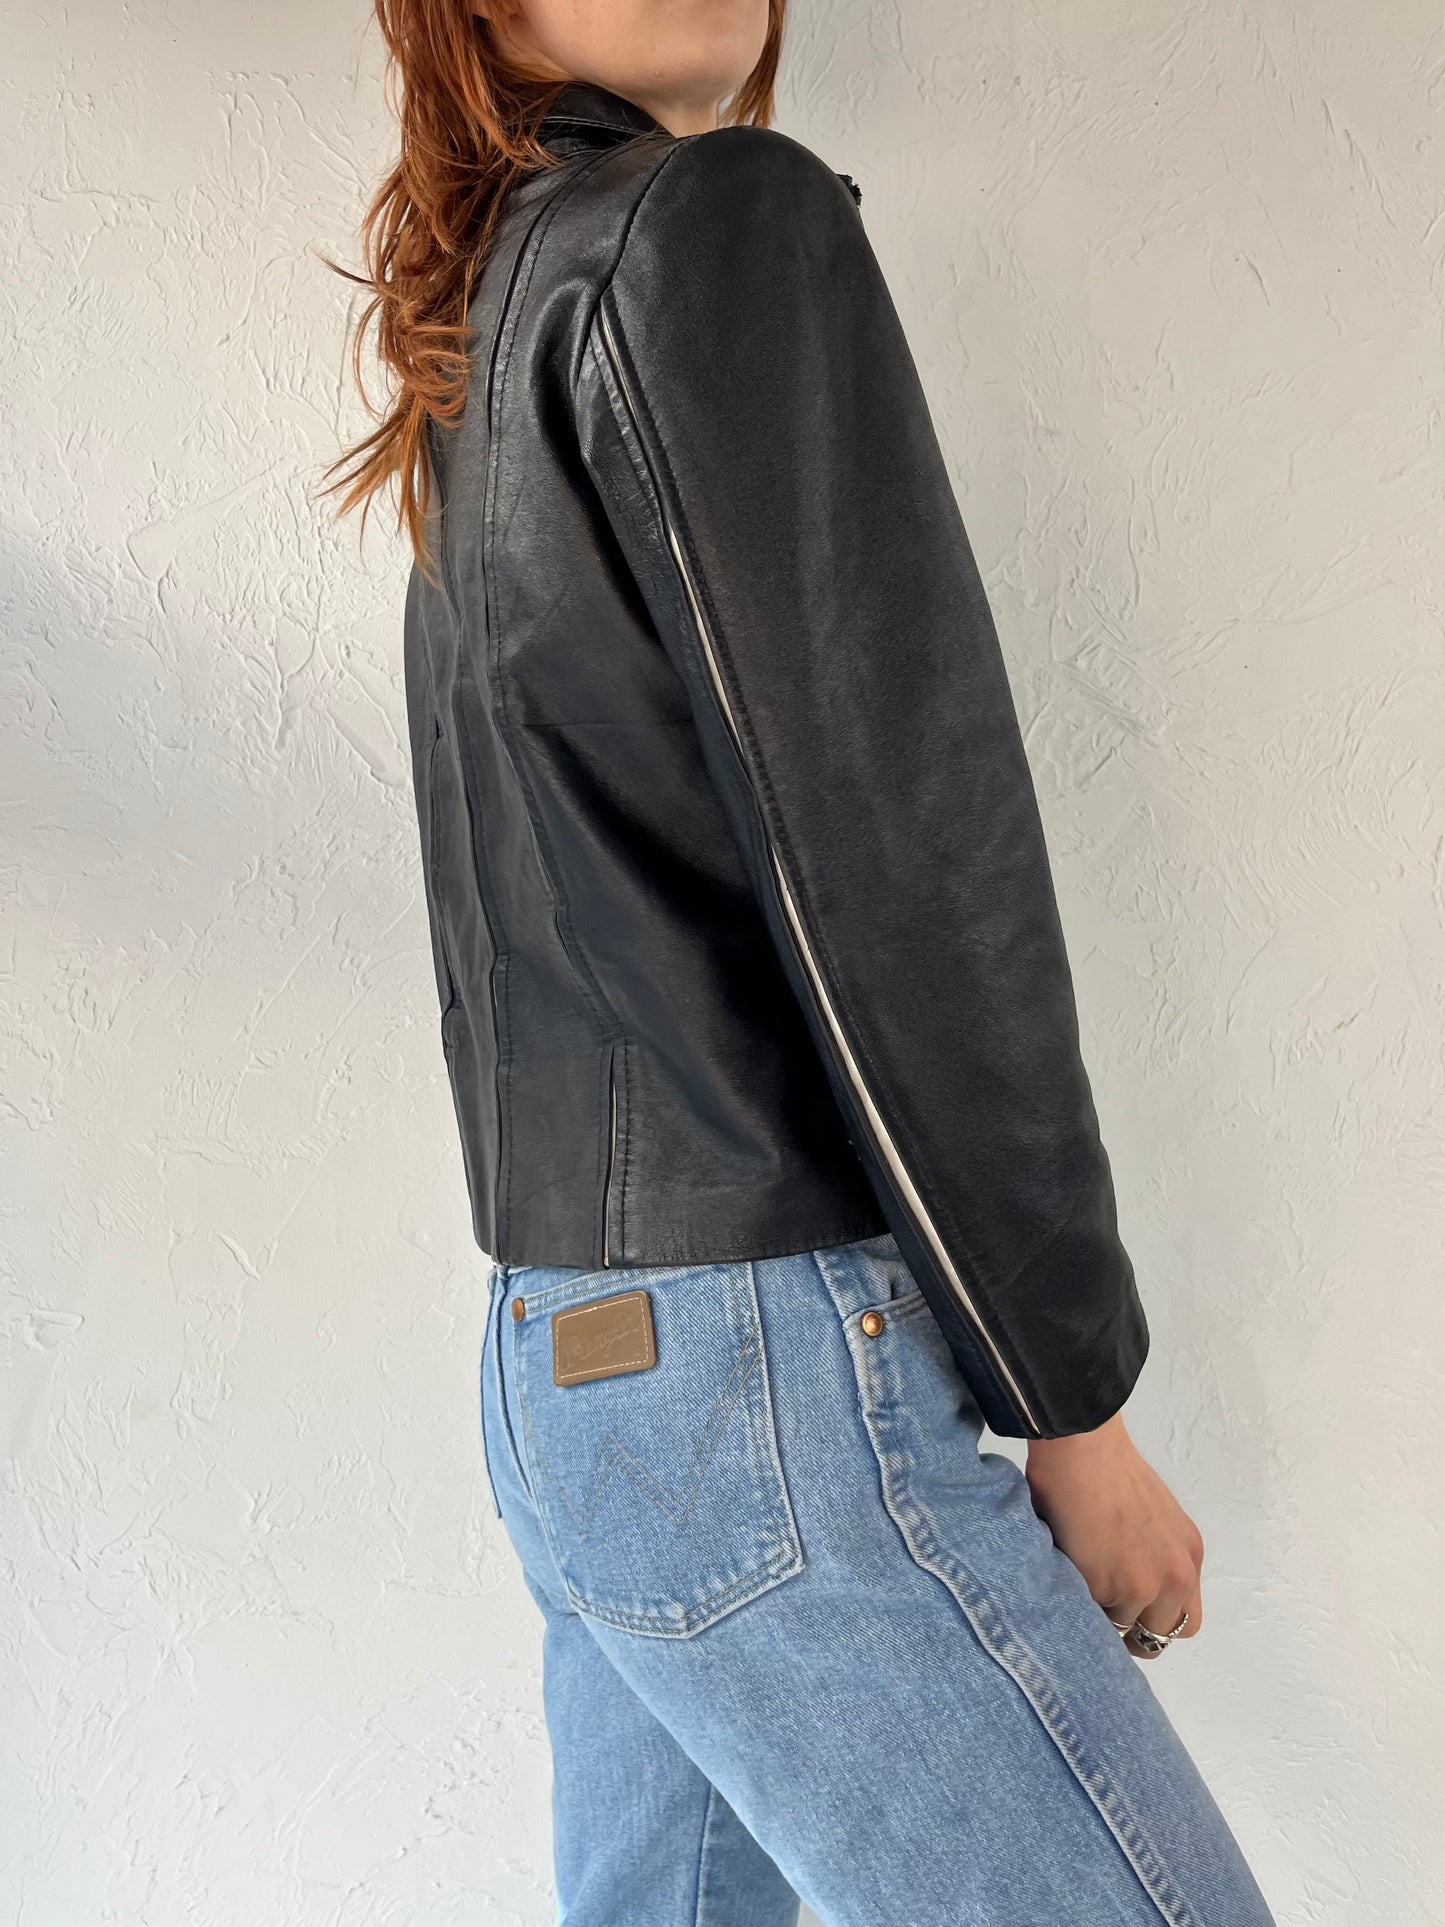 Y2K Lightweight Leather Jacket / Small - Medium